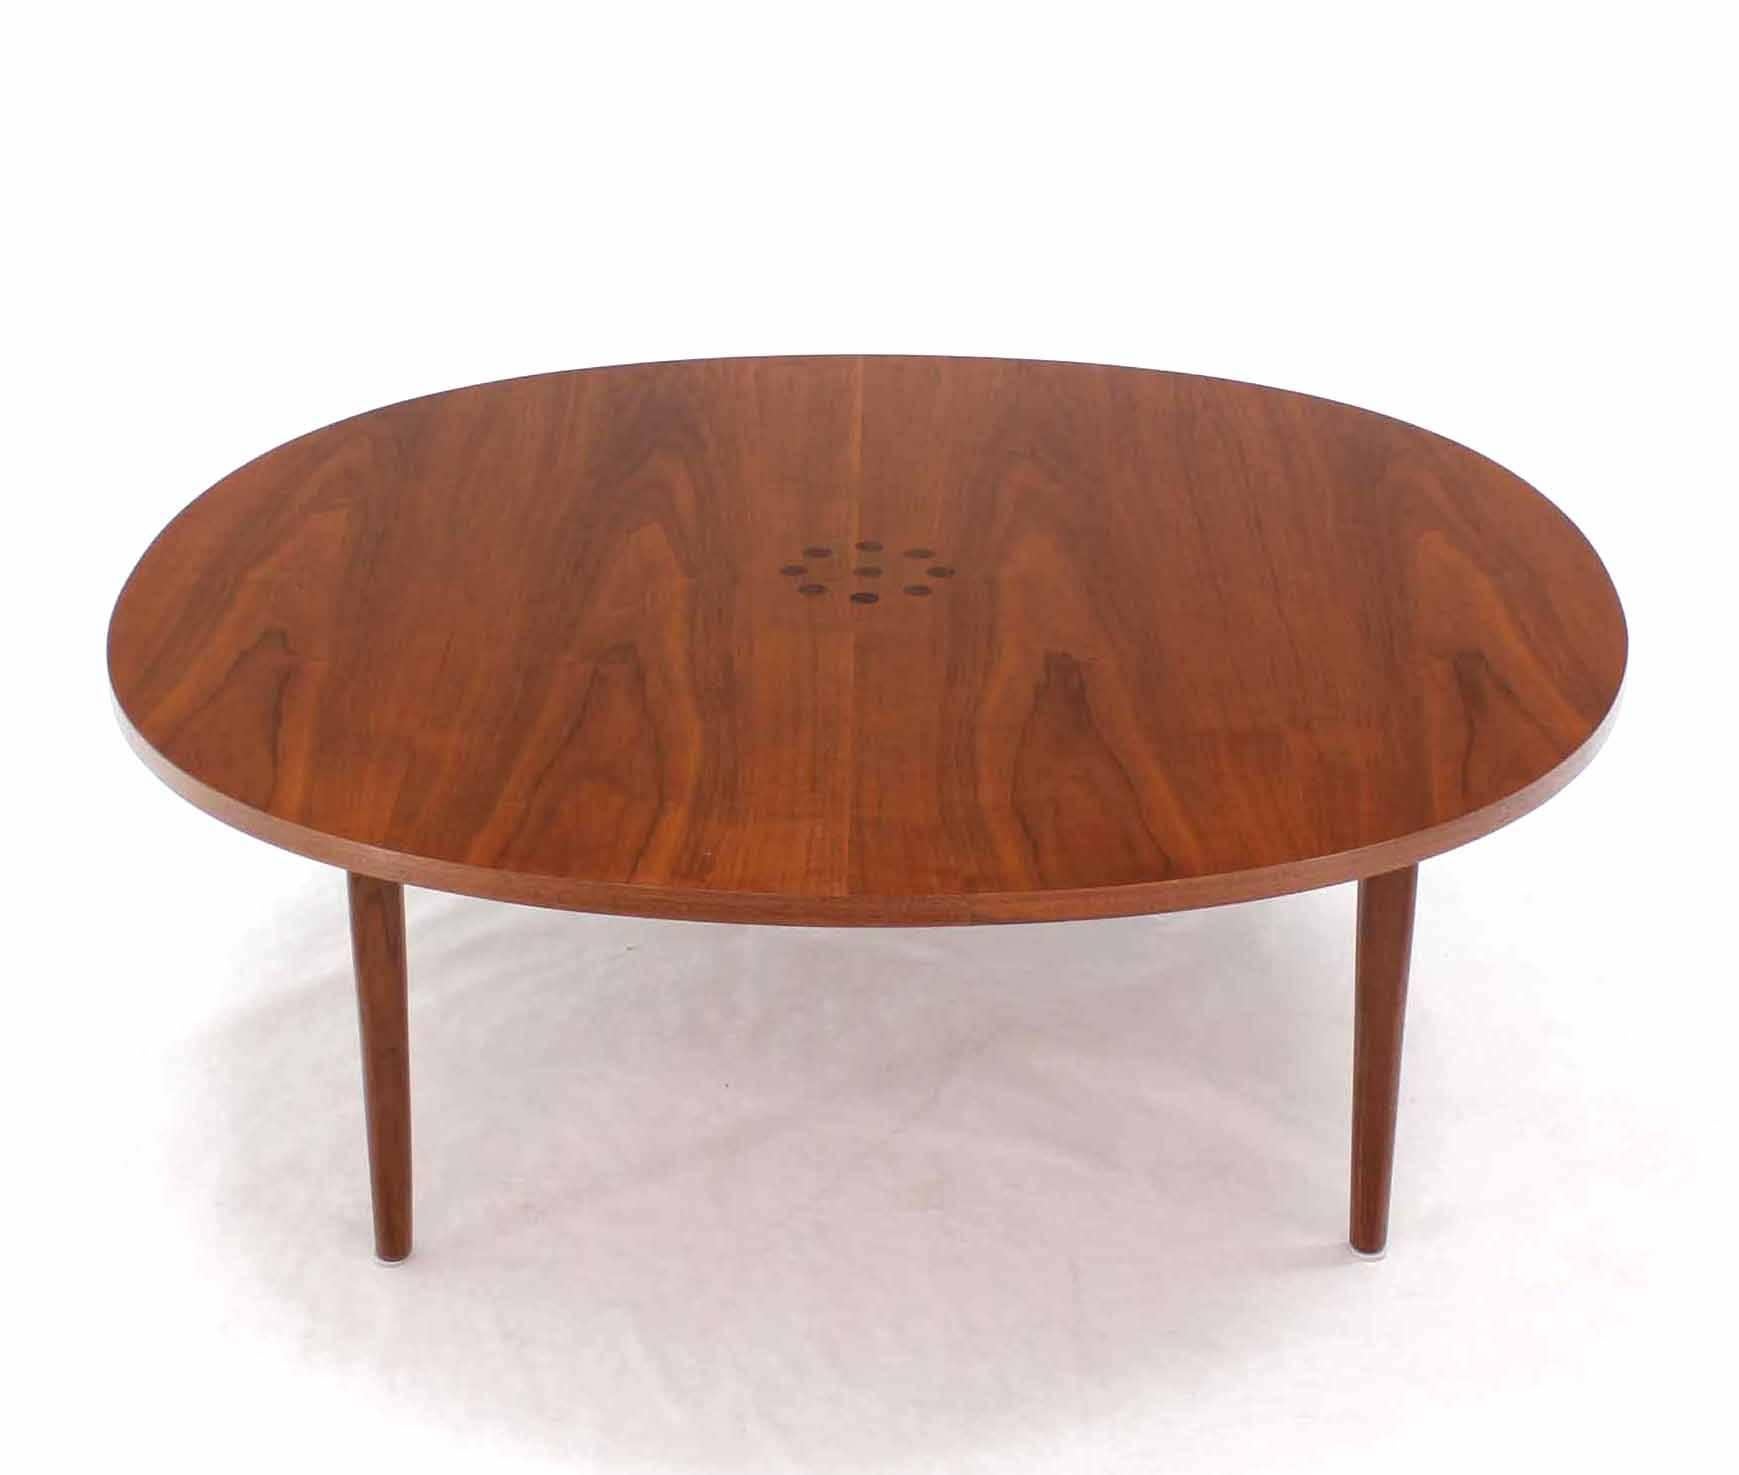 Nice round Mid-Century Modern walnut coffee table.